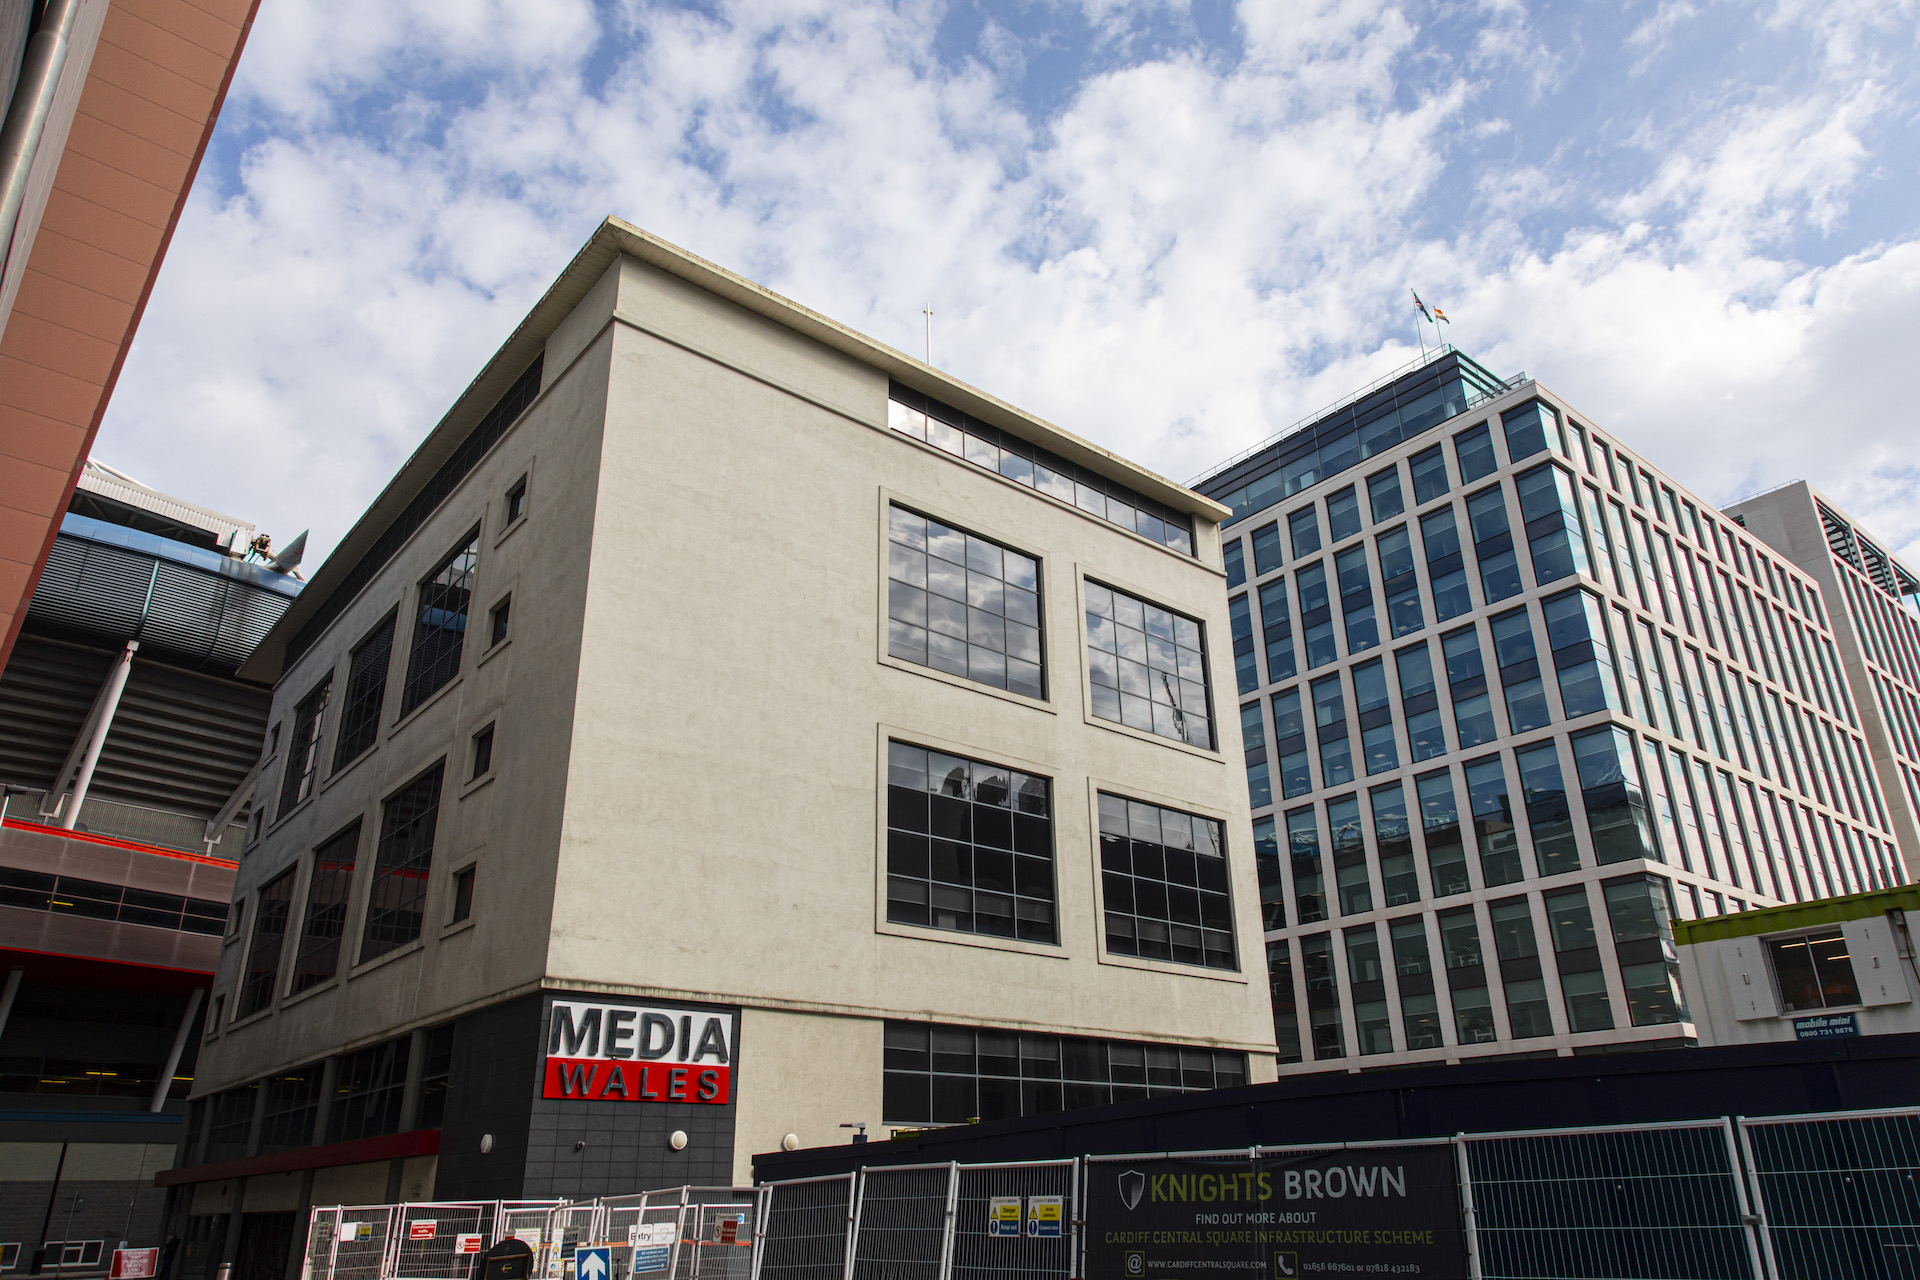 Media Wales Building